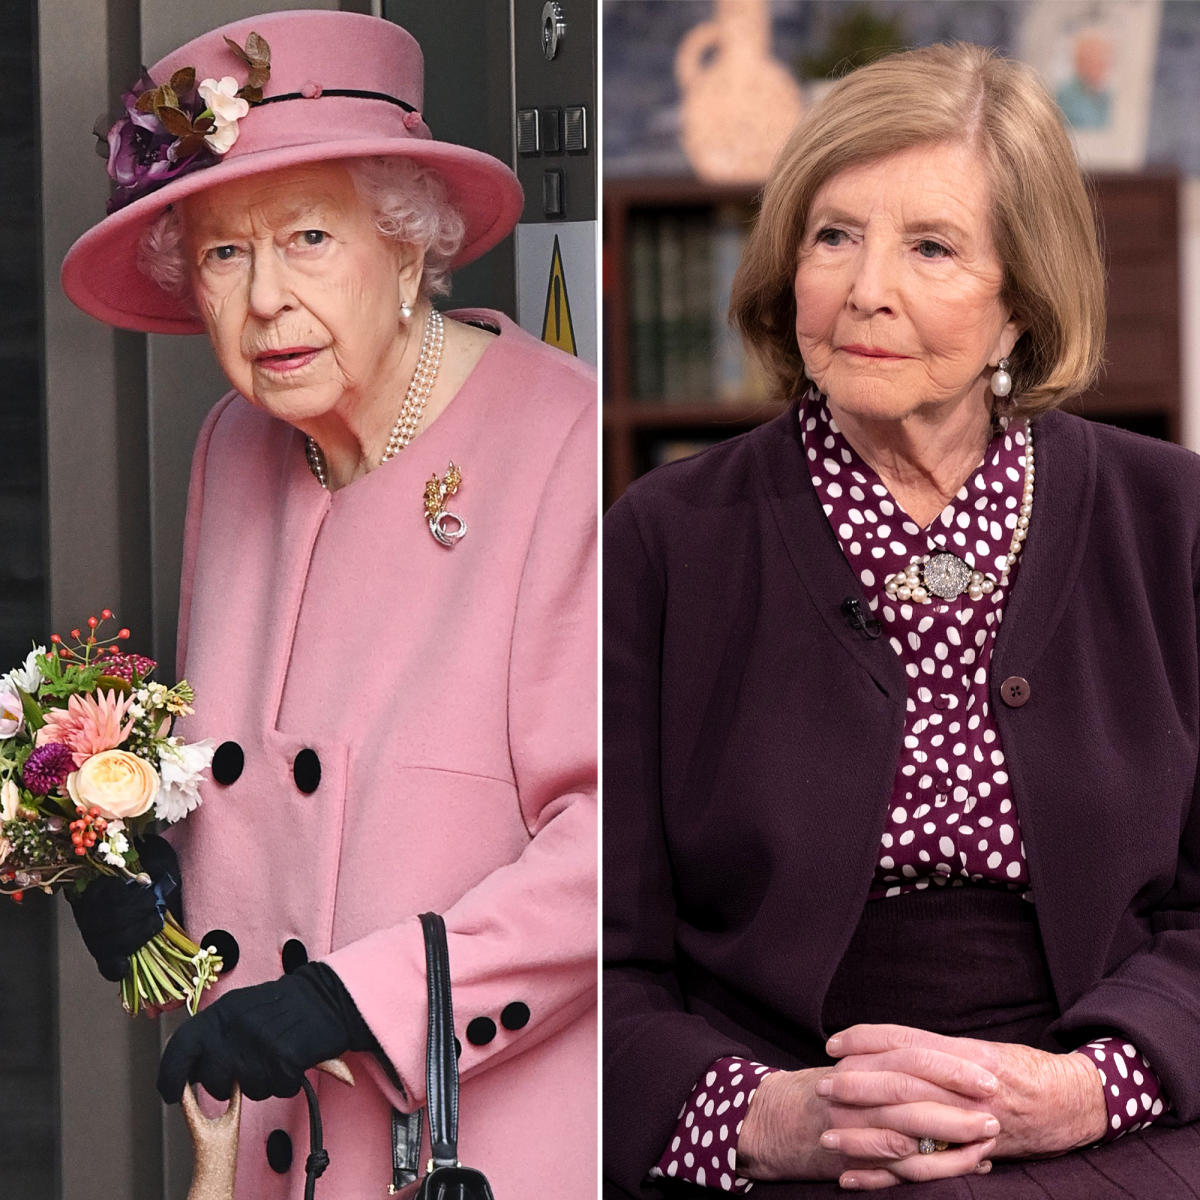 Queen Elizabeth's friend slams 'The Crown' as 'fantasy